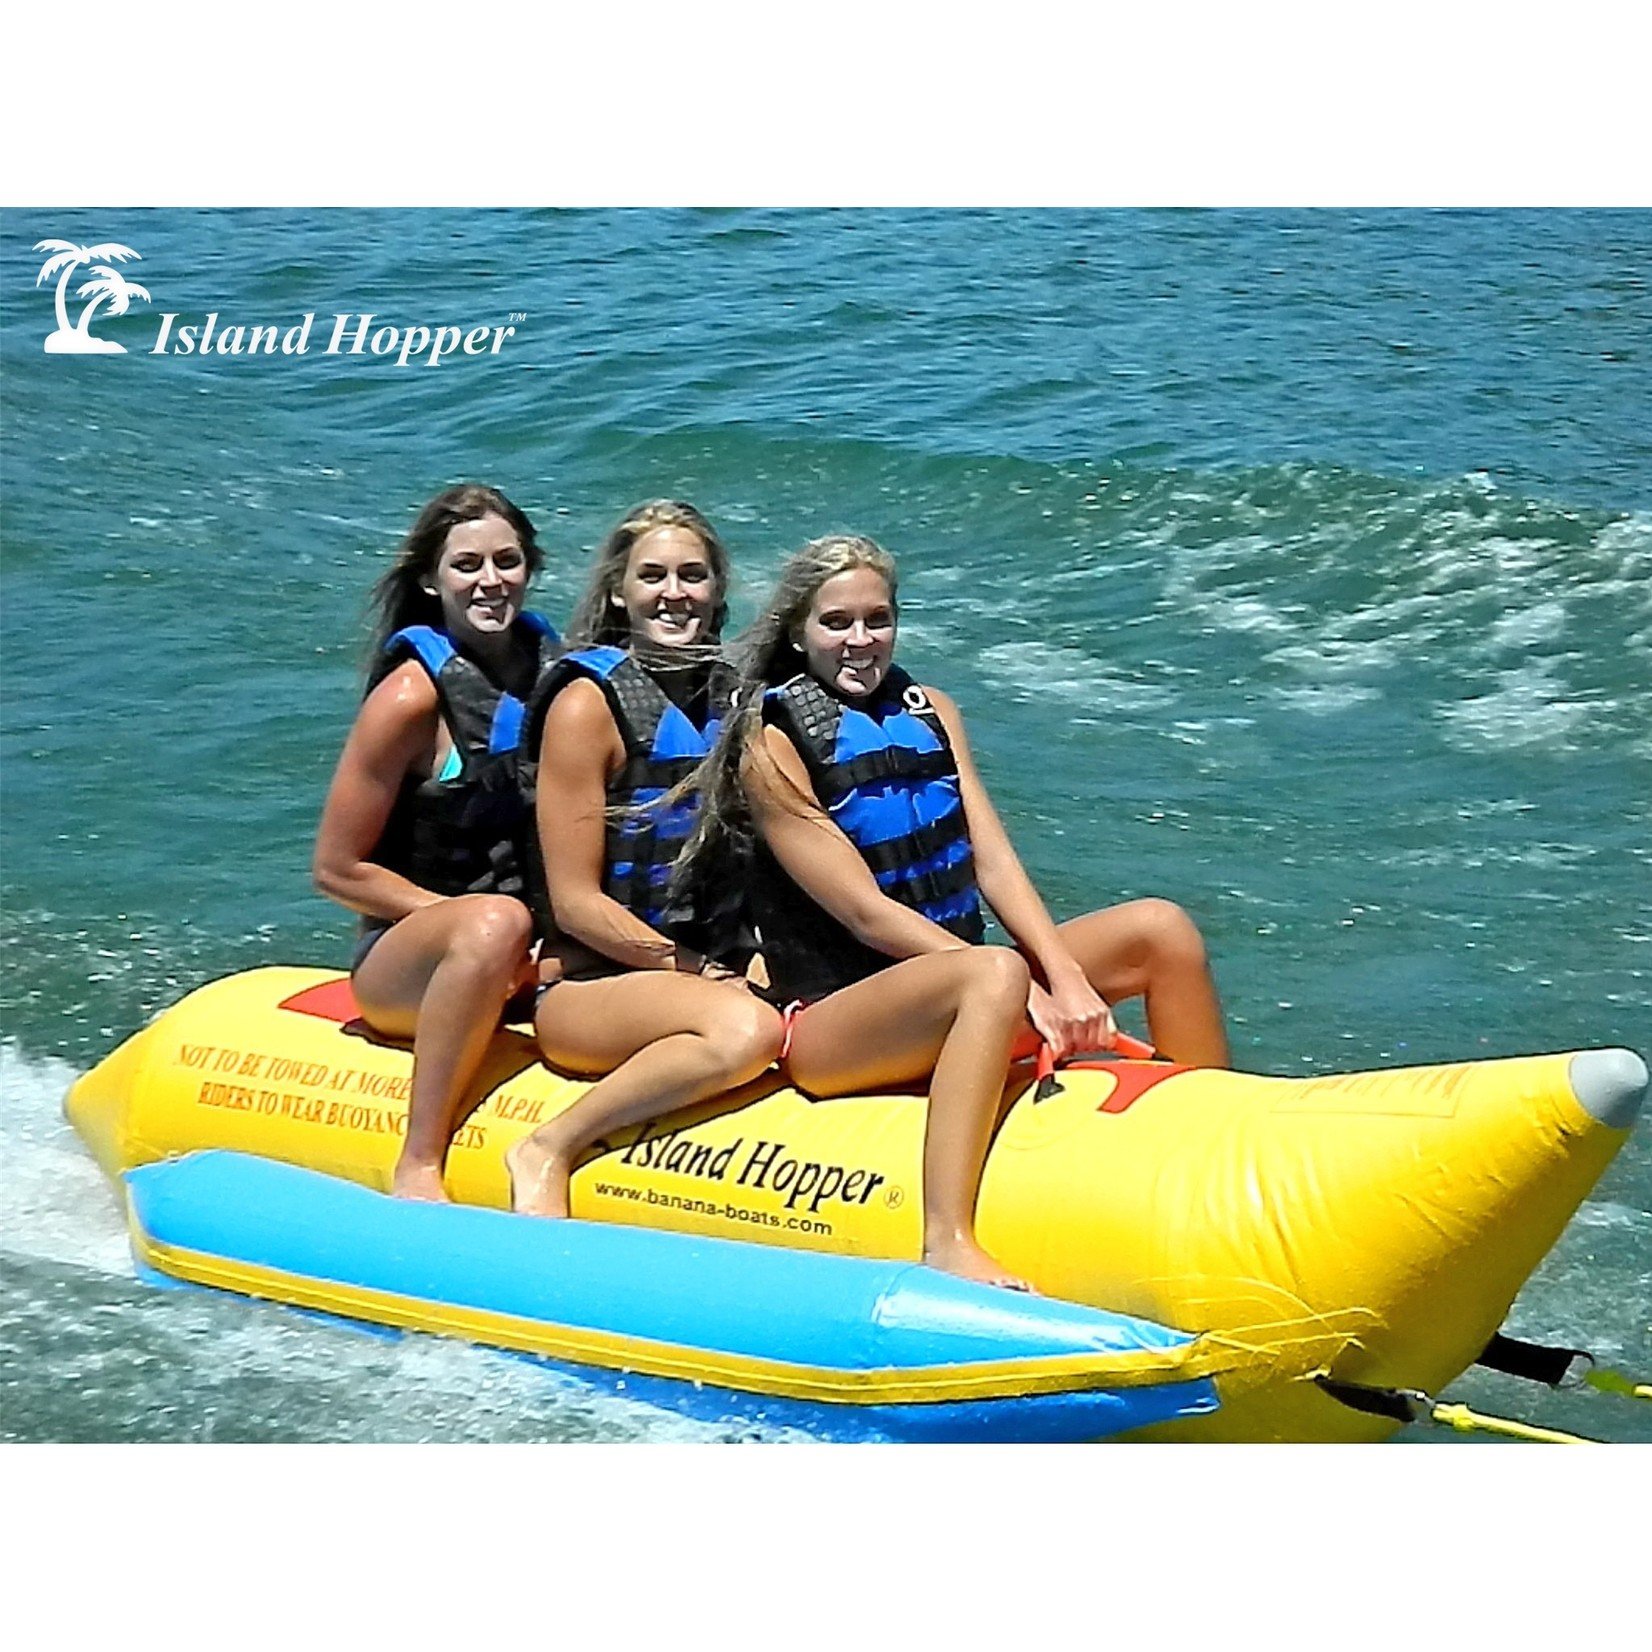 Island Hopper Island Hopper "Heavy Recreational" 3 Passenger Banana Boat